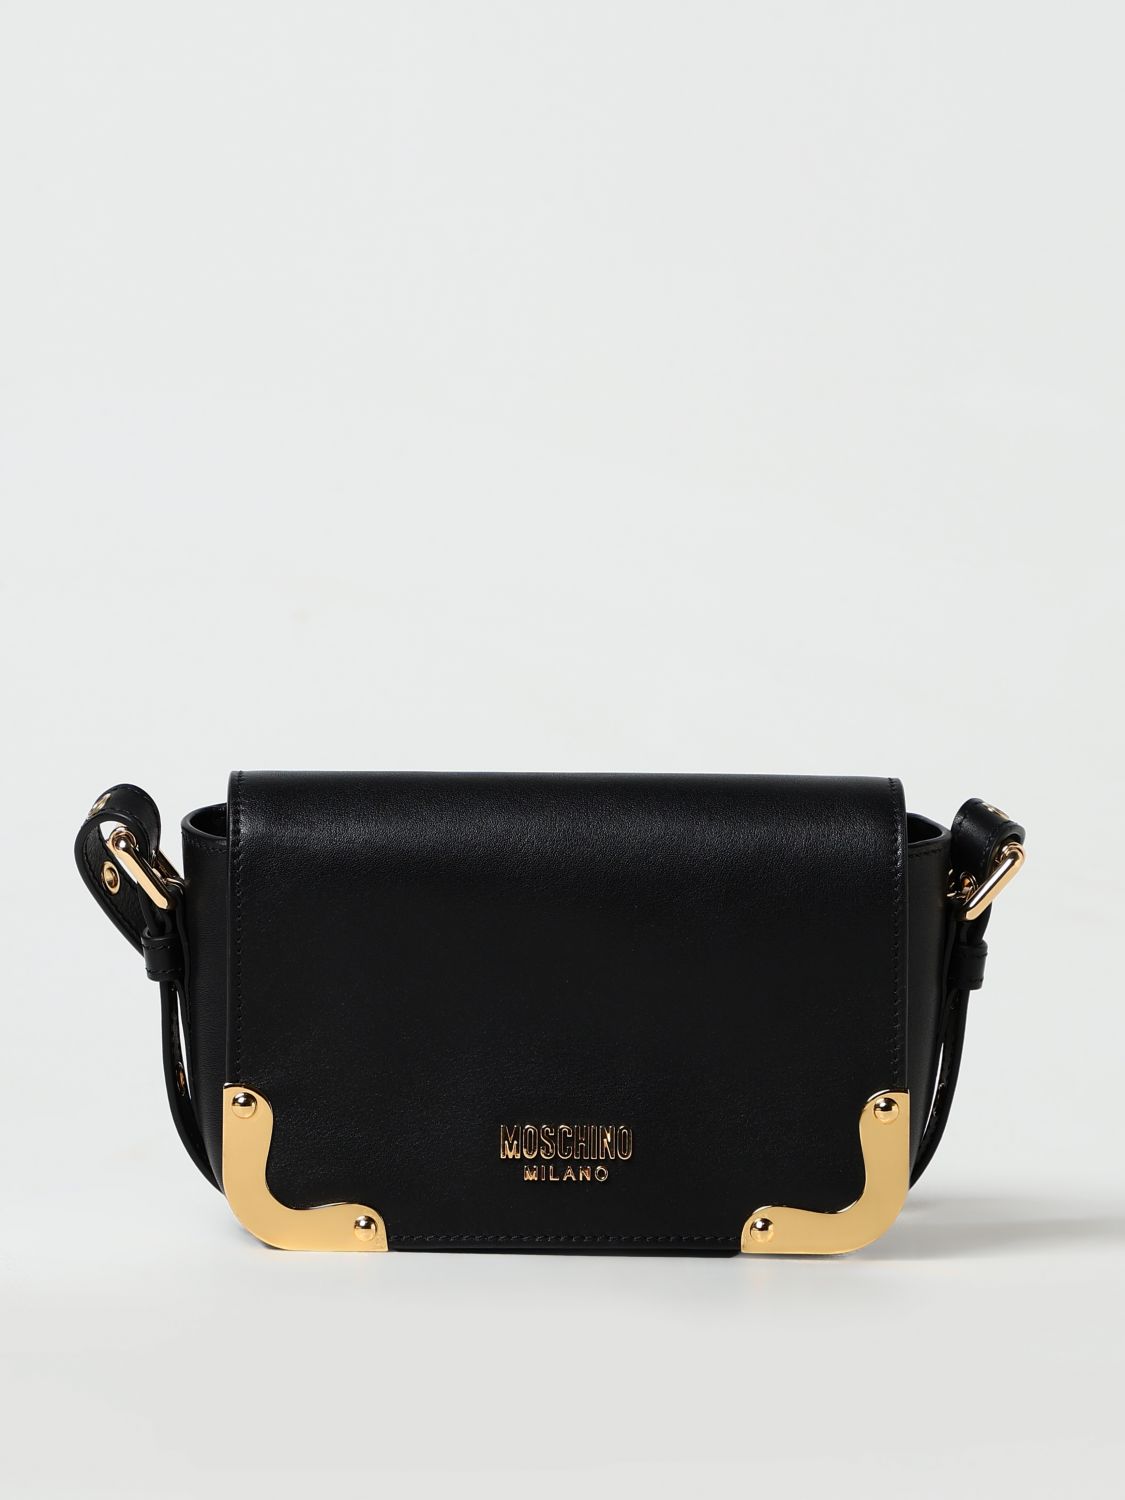 Moschino Couture Mini Bag MOSCHINO COUTURE Woman color Black